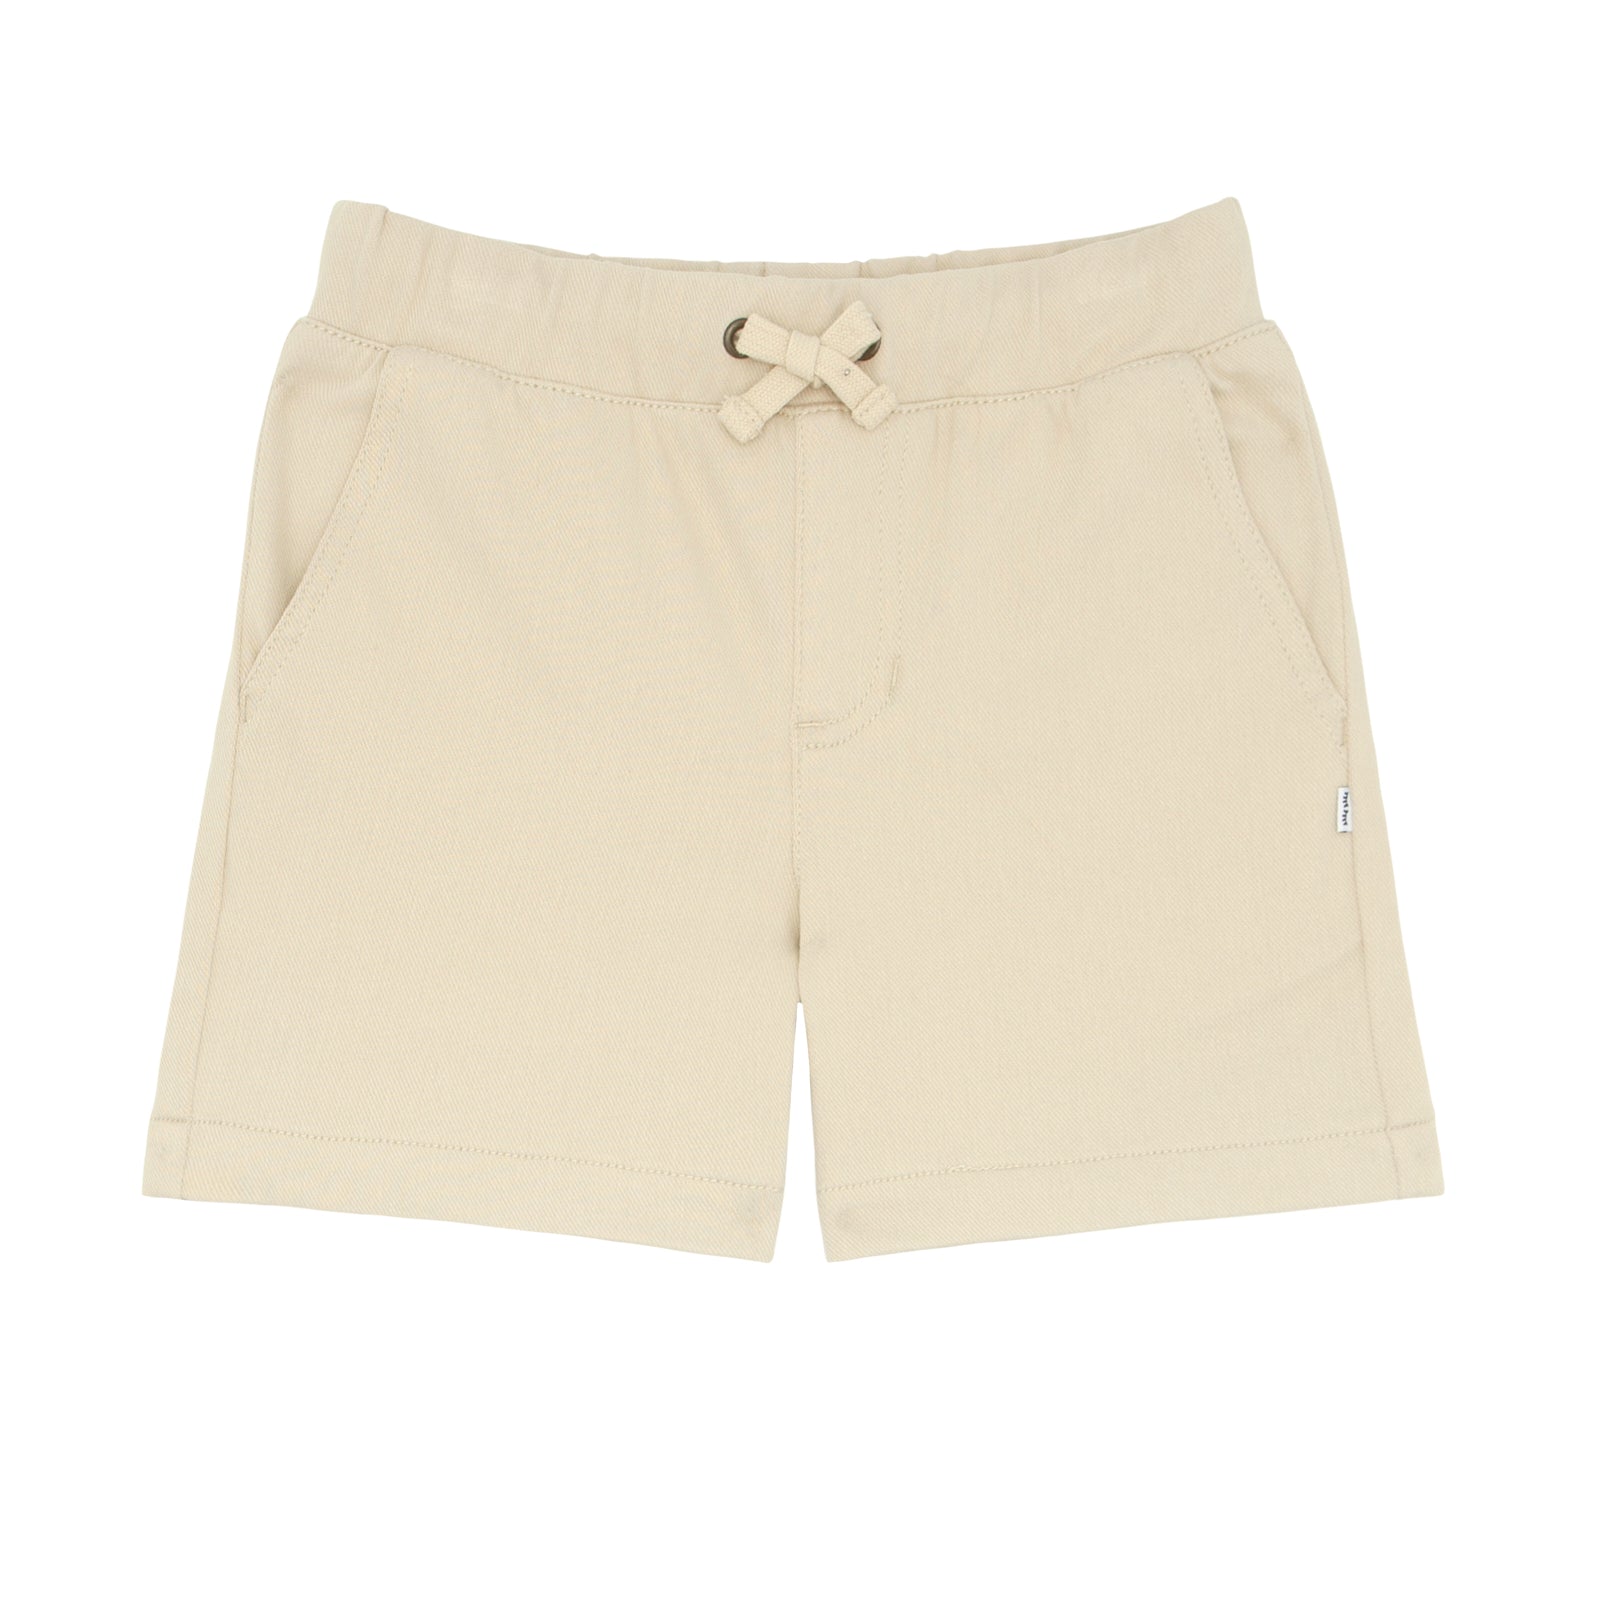 Flat lay image of Light Khaki chino shorts